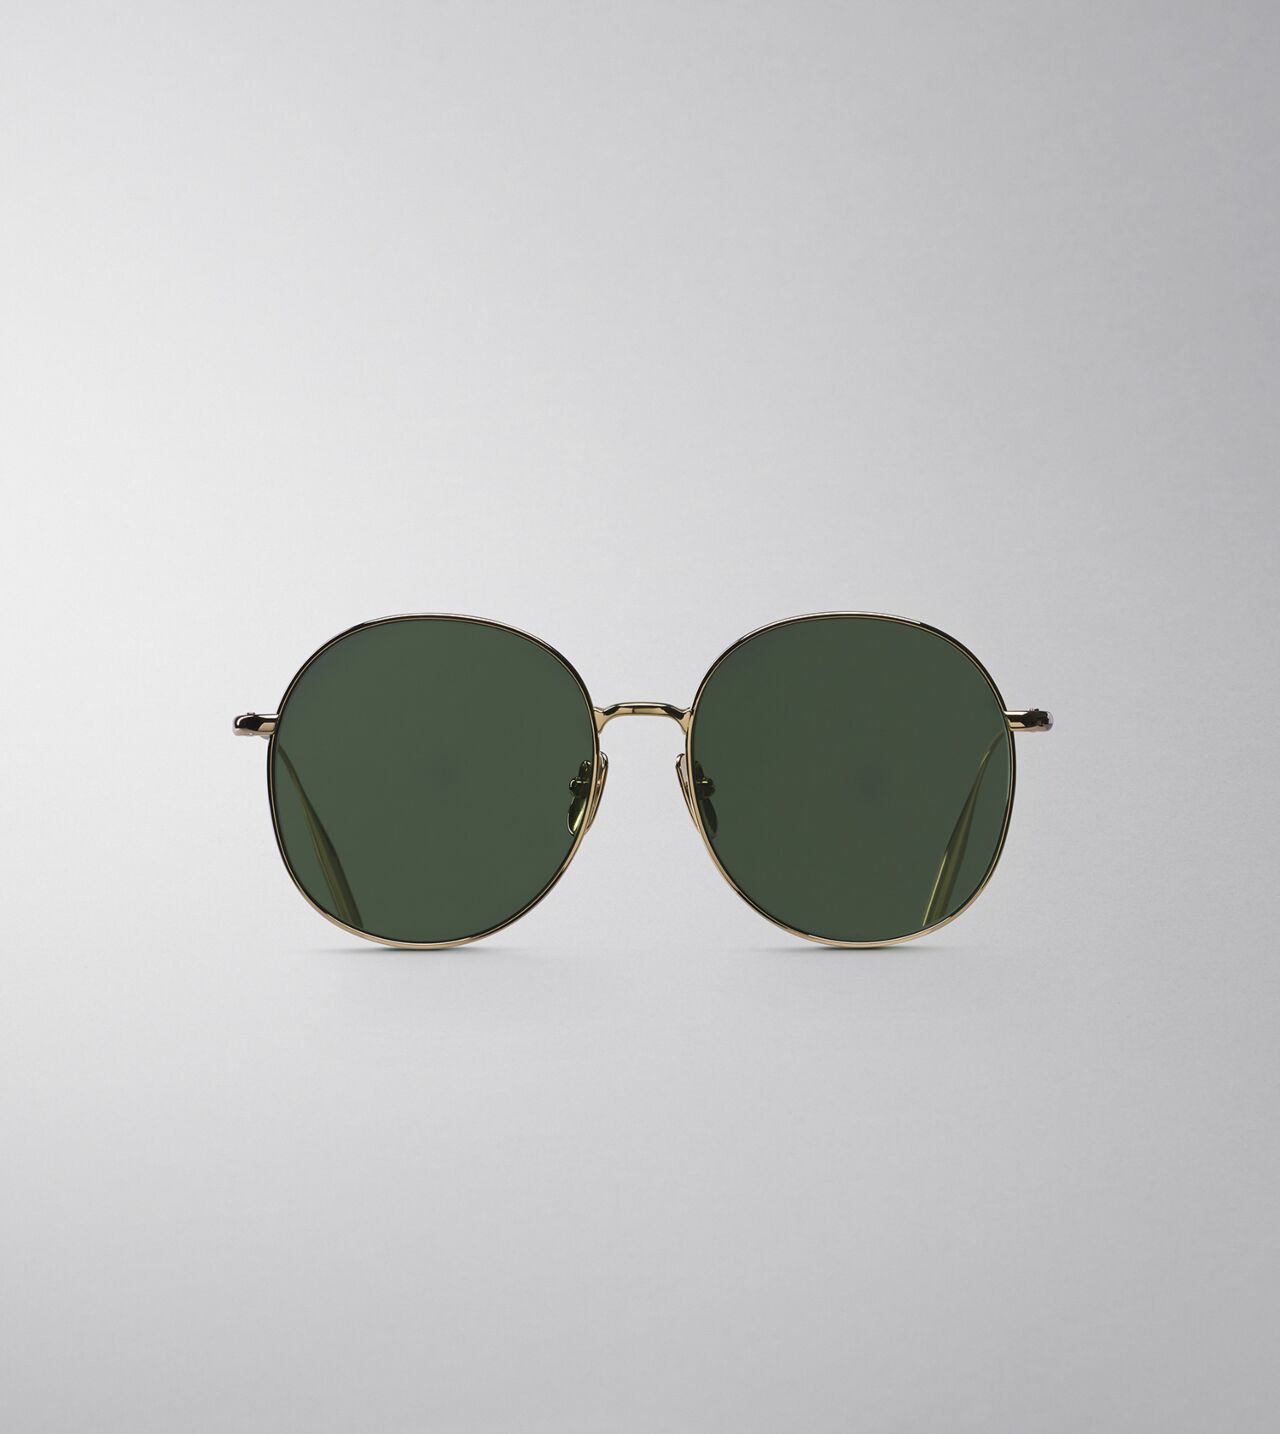 Usami Sunglasses in Gold green